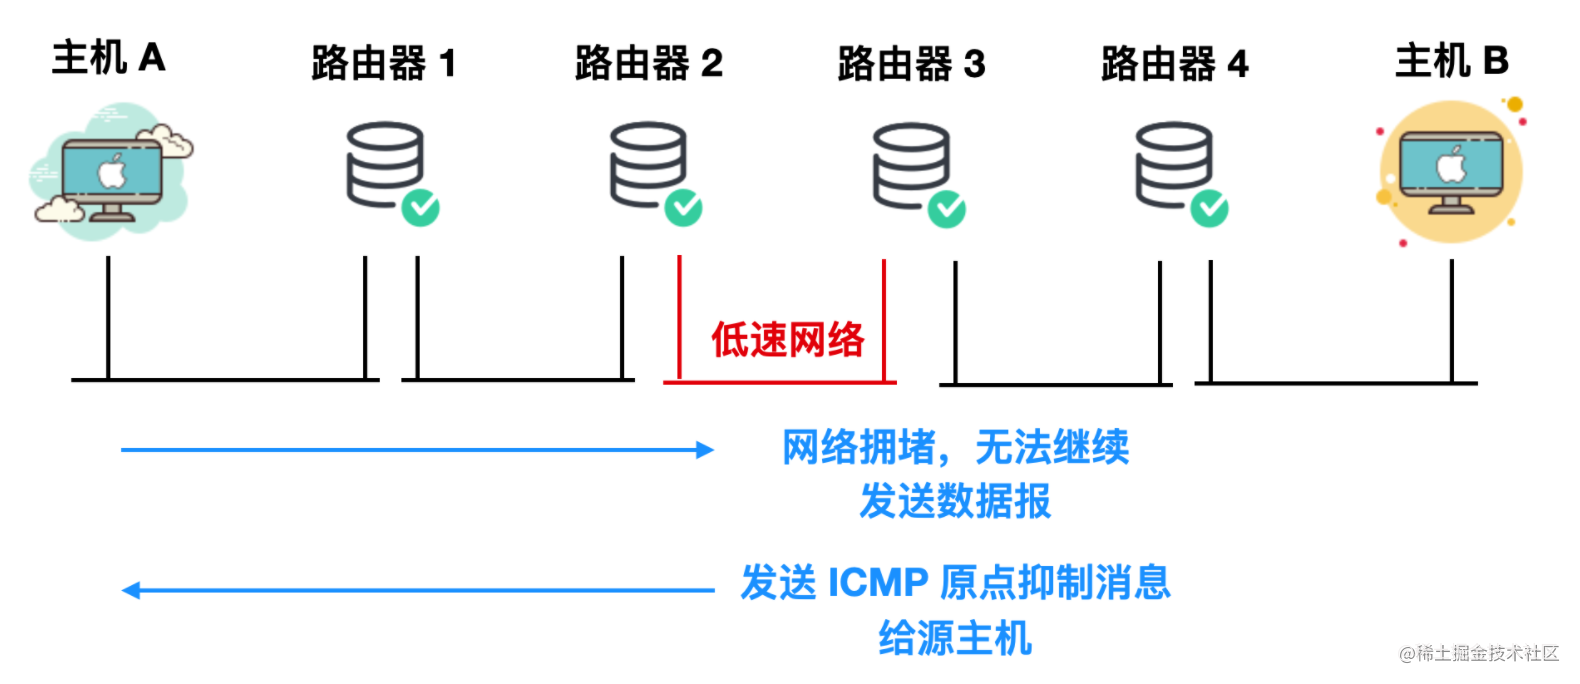 Ping 的工作原理你懂了，那 ICMP 你懂不懂？